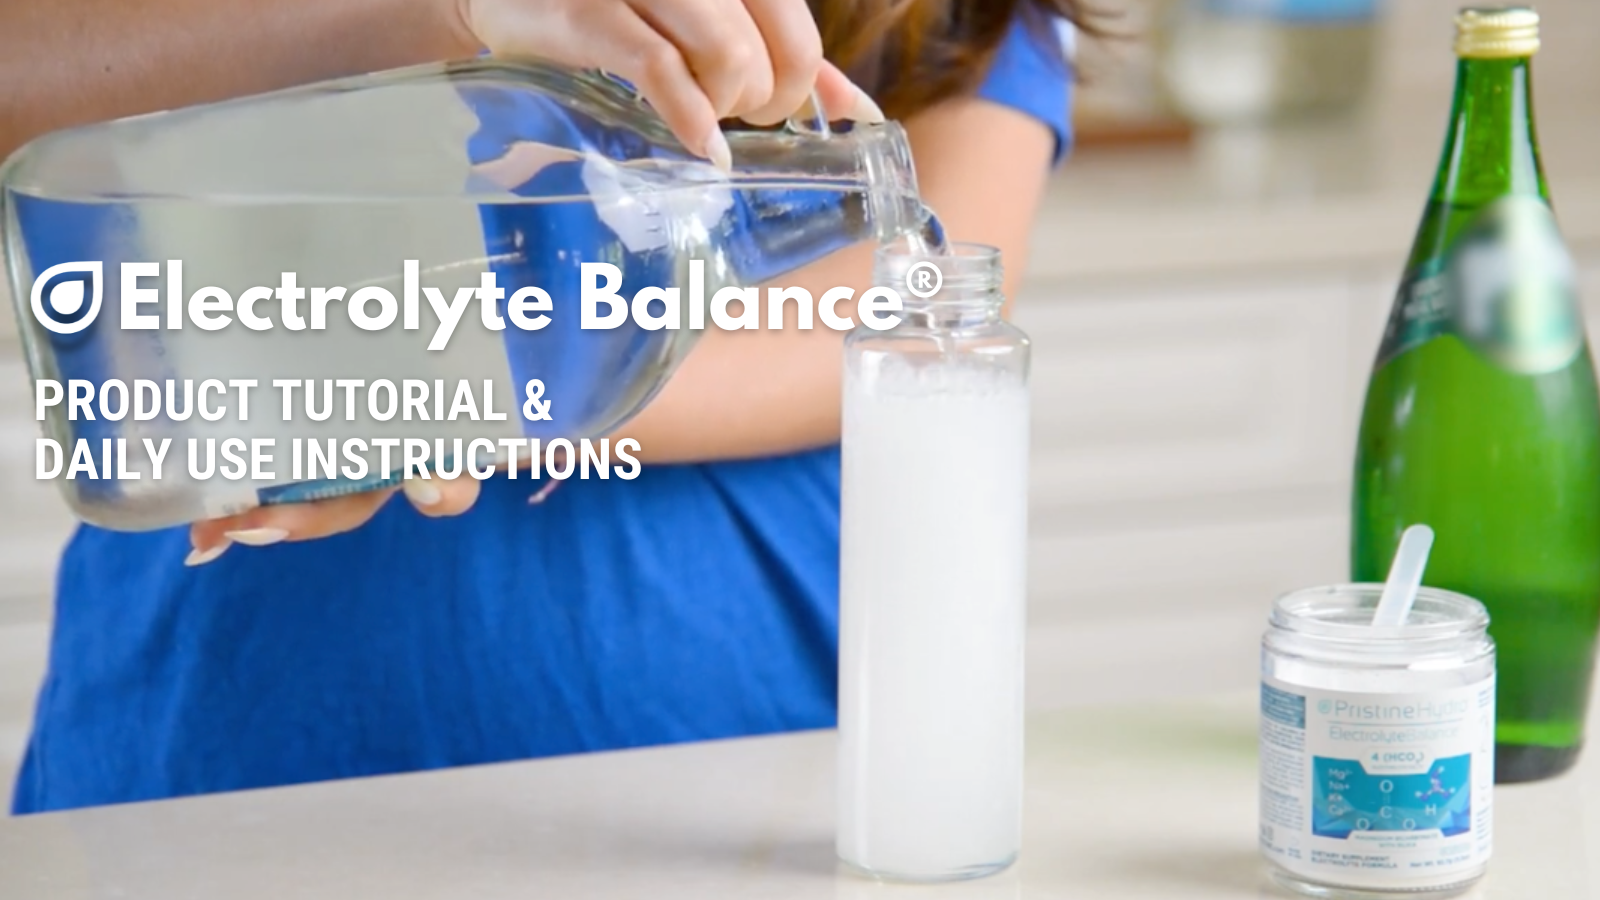 Electrolyte Balance Powder Product Tutorial & Daily Use Instructions